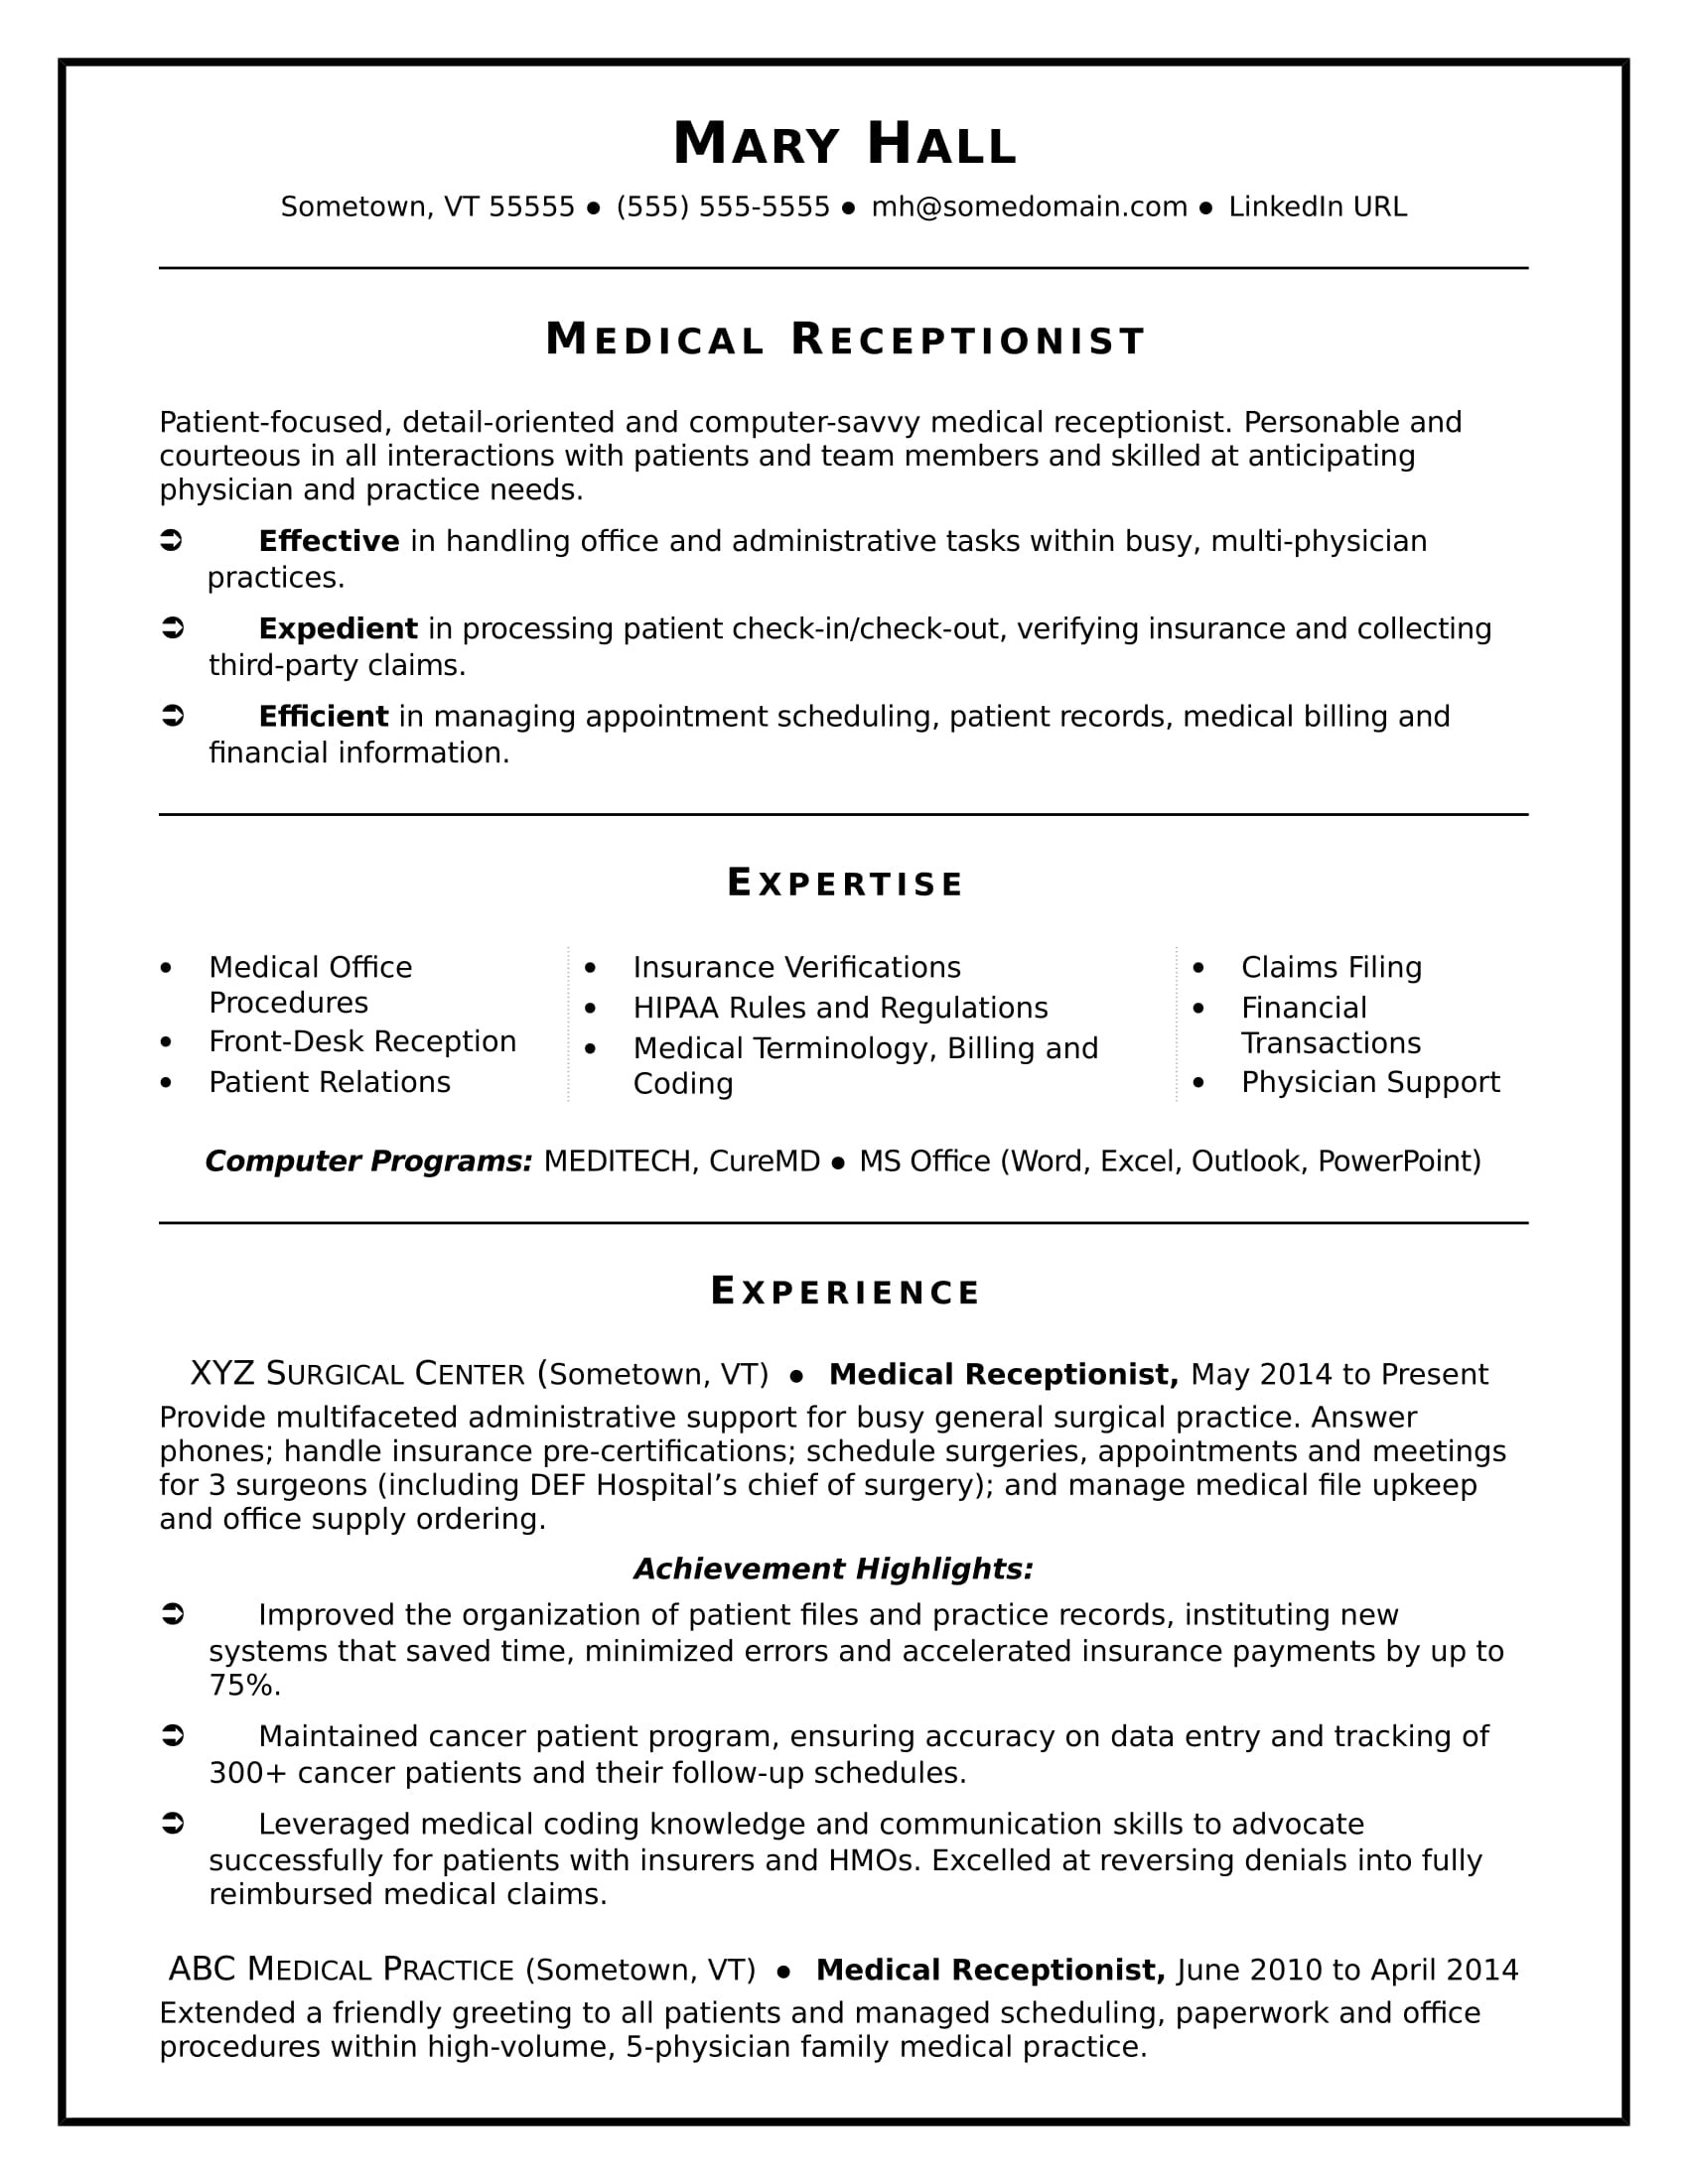 Sample Resume for Healthcare Administrative assistant Medical Receptionist Resume Sample Monster.com